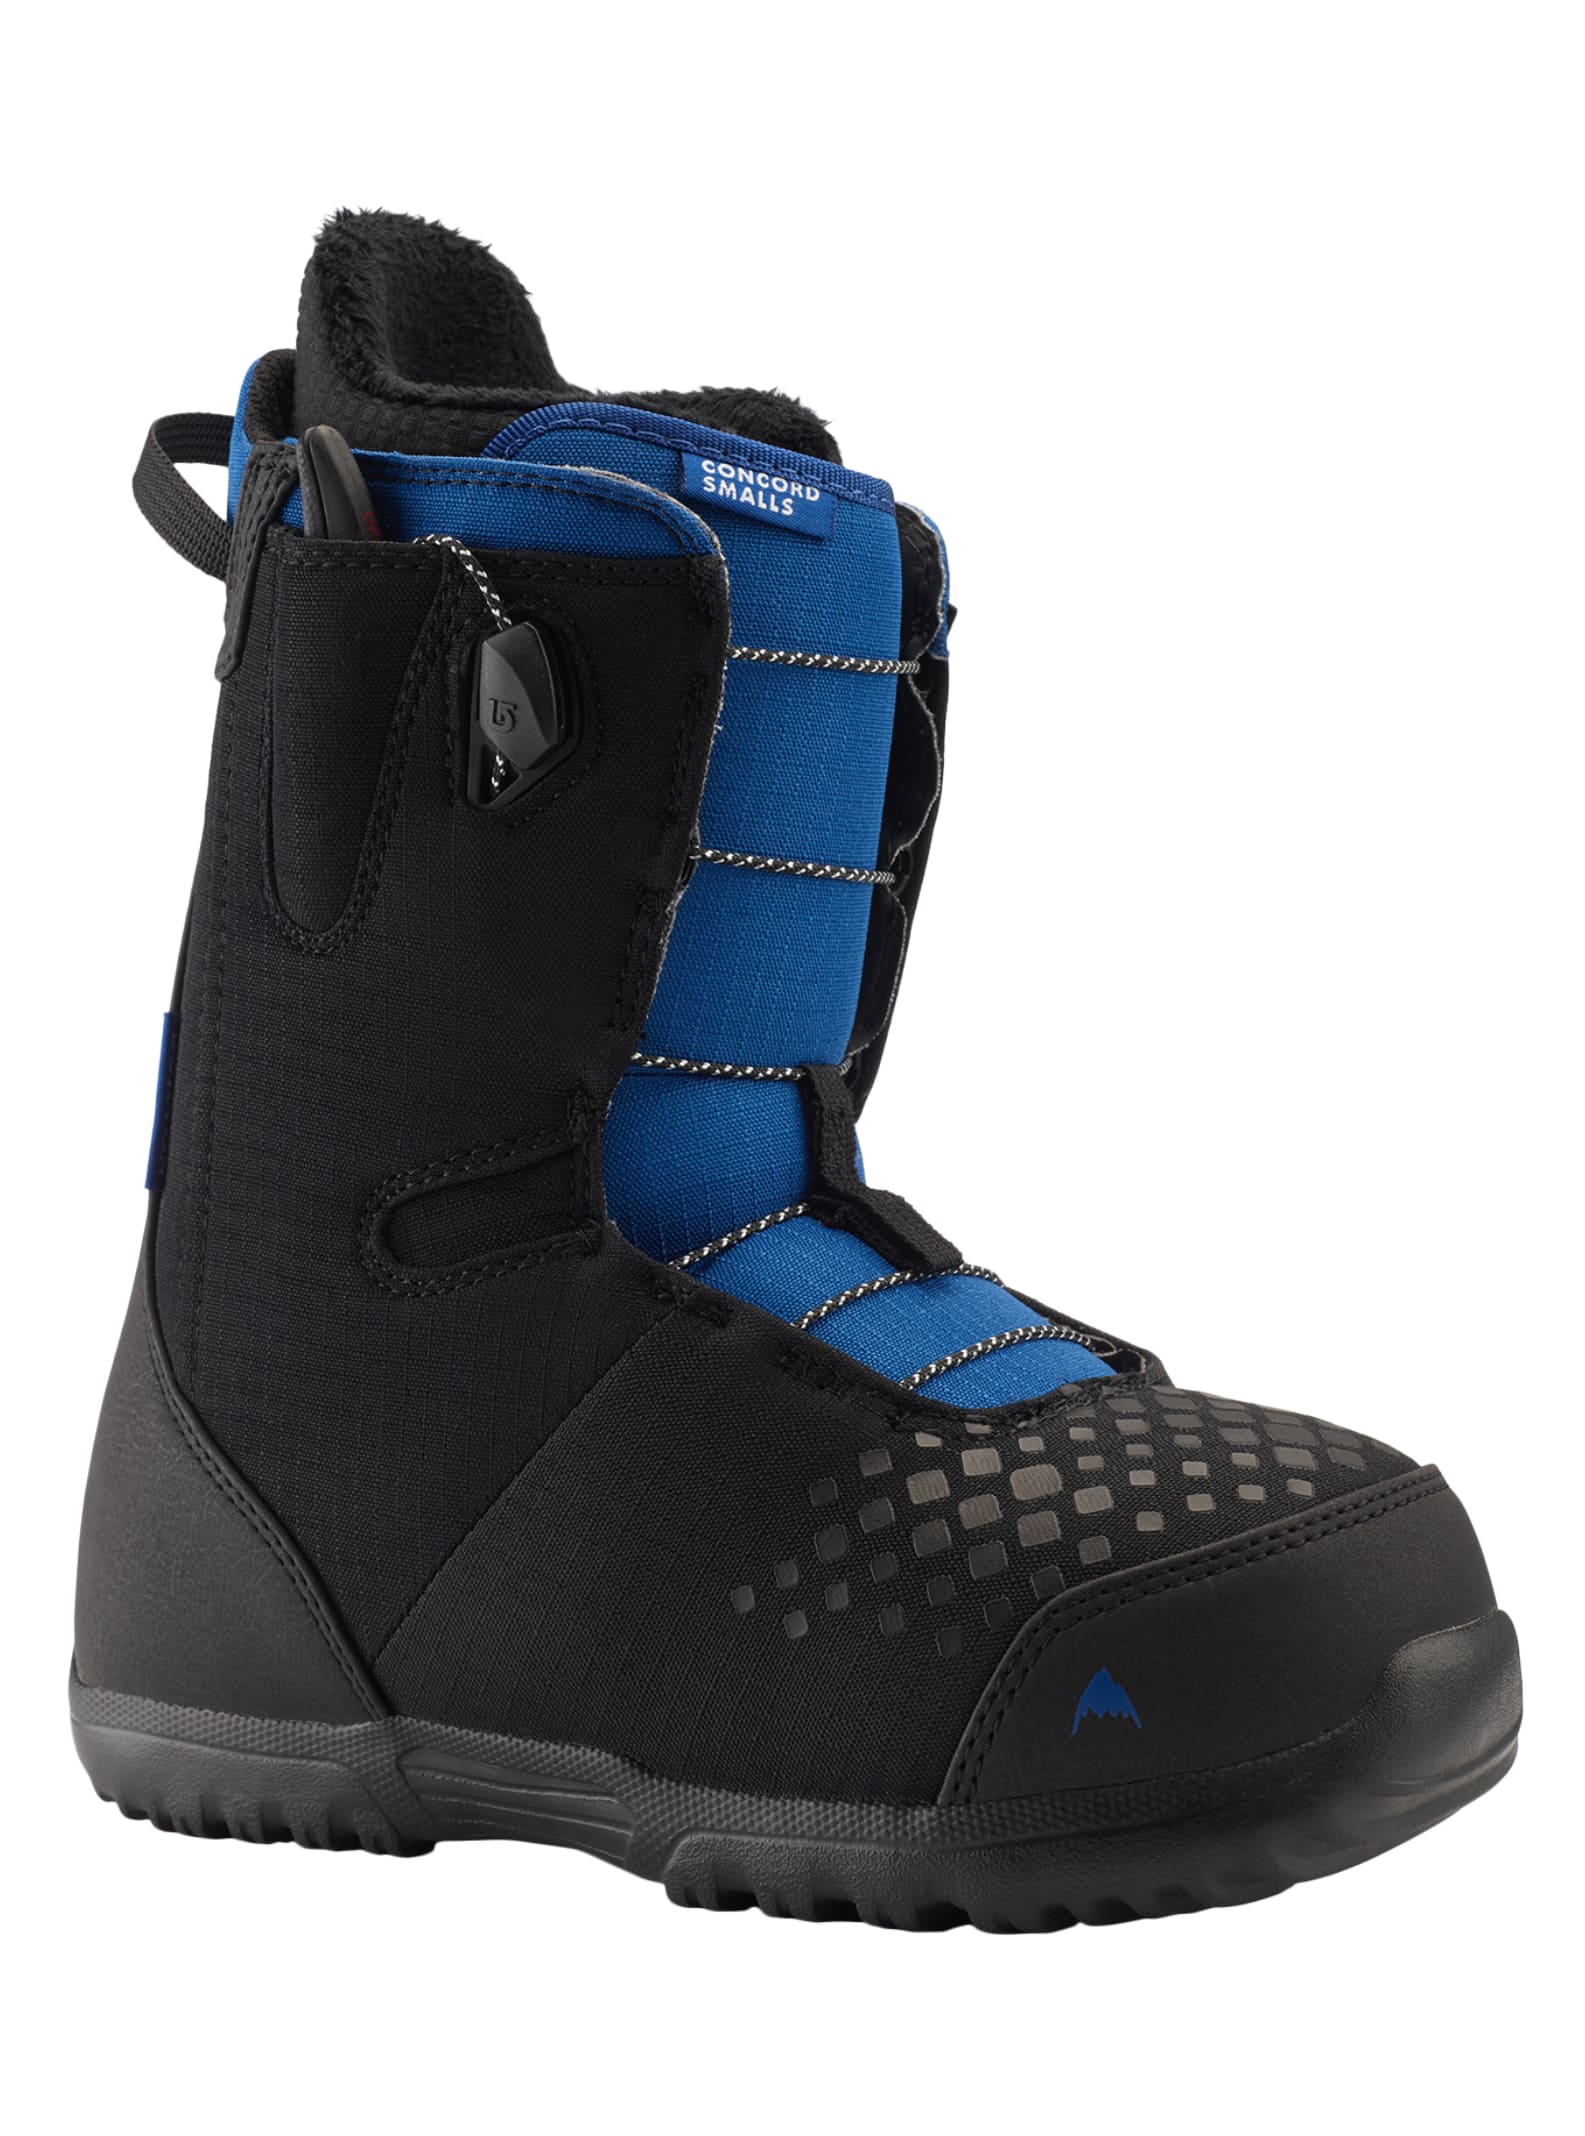 Burton - Boots de snowboard Concord Smalls enfant, Black / Blue, 5K